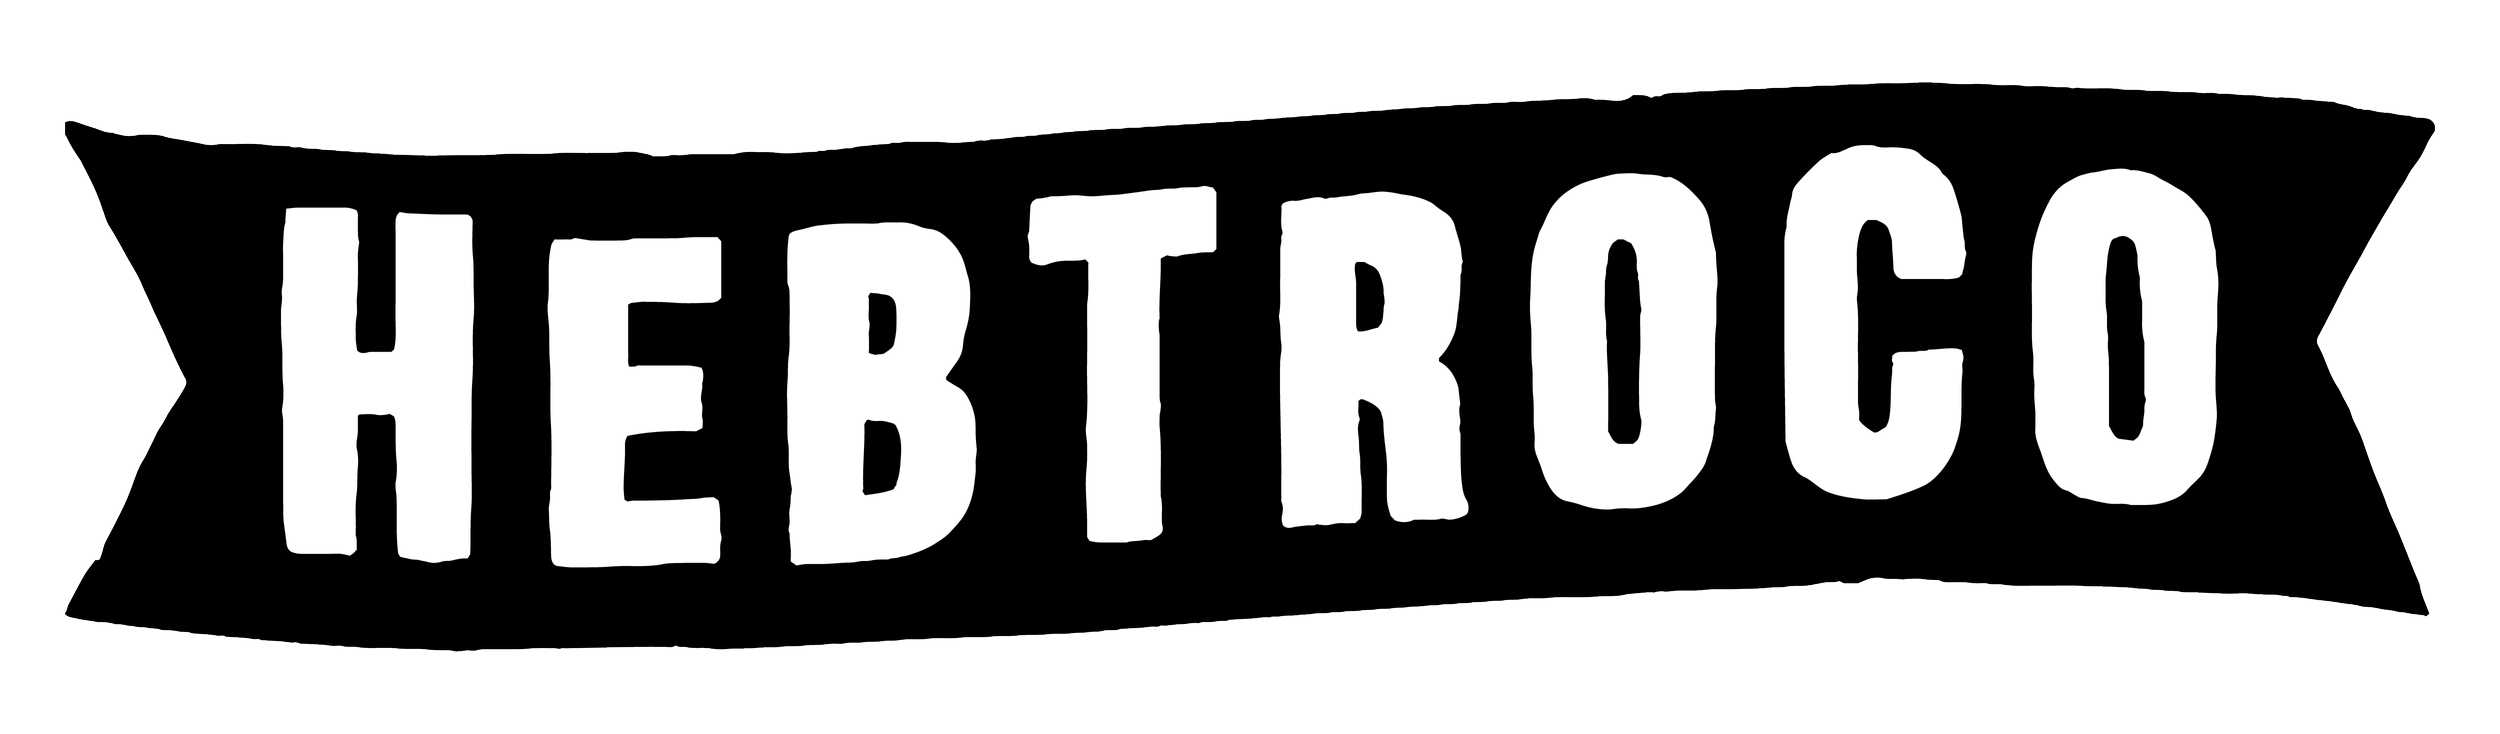 Logo_HebTroCo_Black_WhiteFill-NoBG.png